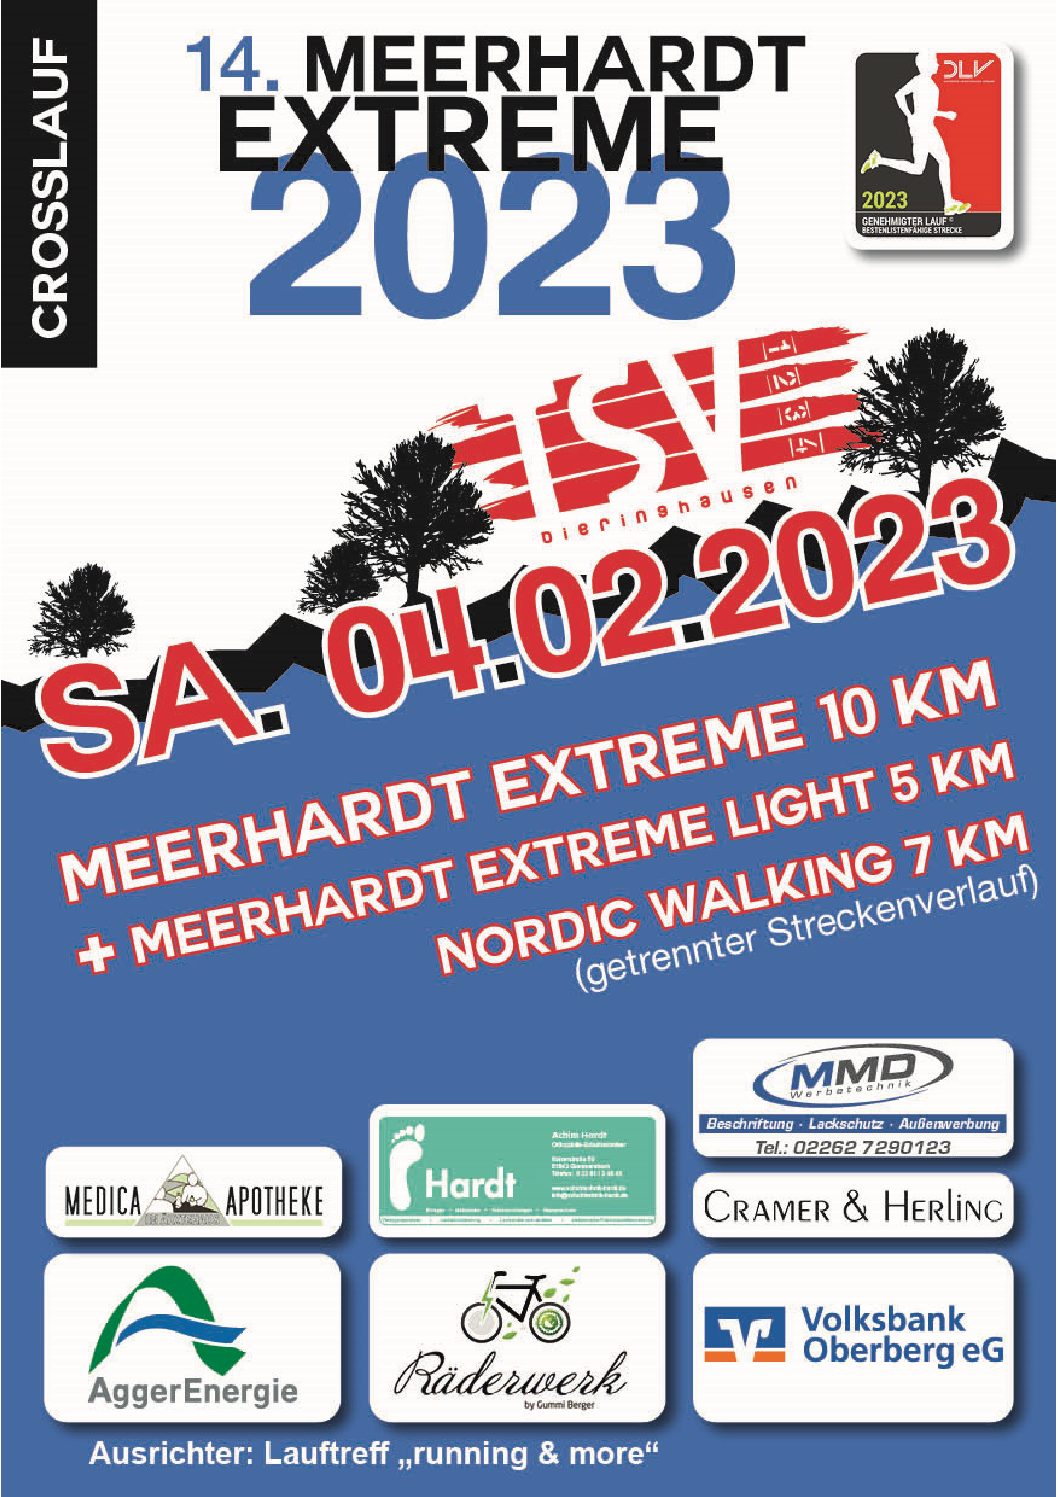 Meerhardt Extreme 2023